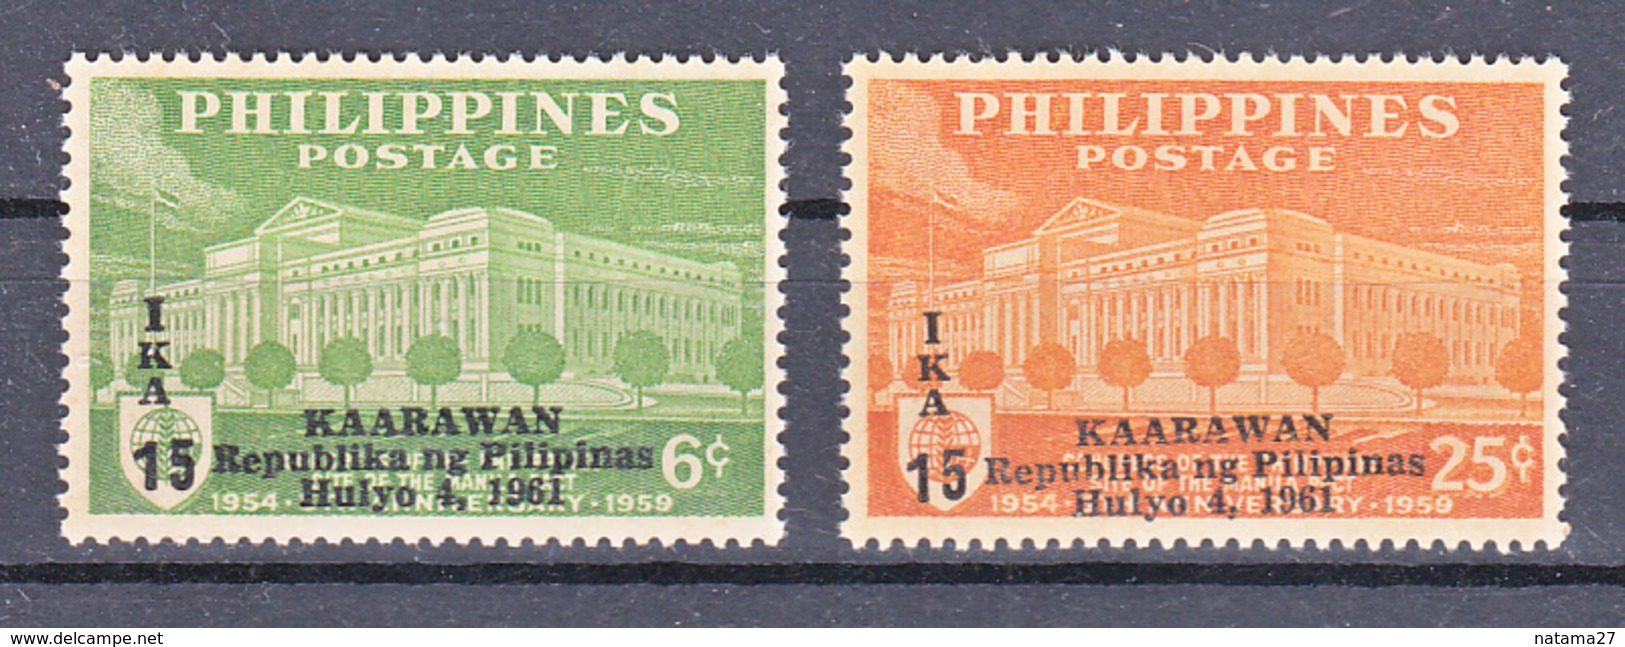 Filippine Philippines Philippinen Pilipinas 1961 Republic 15th Anniversary 1959 SEATO Overprinted Toned Gum MNH** - Philippines